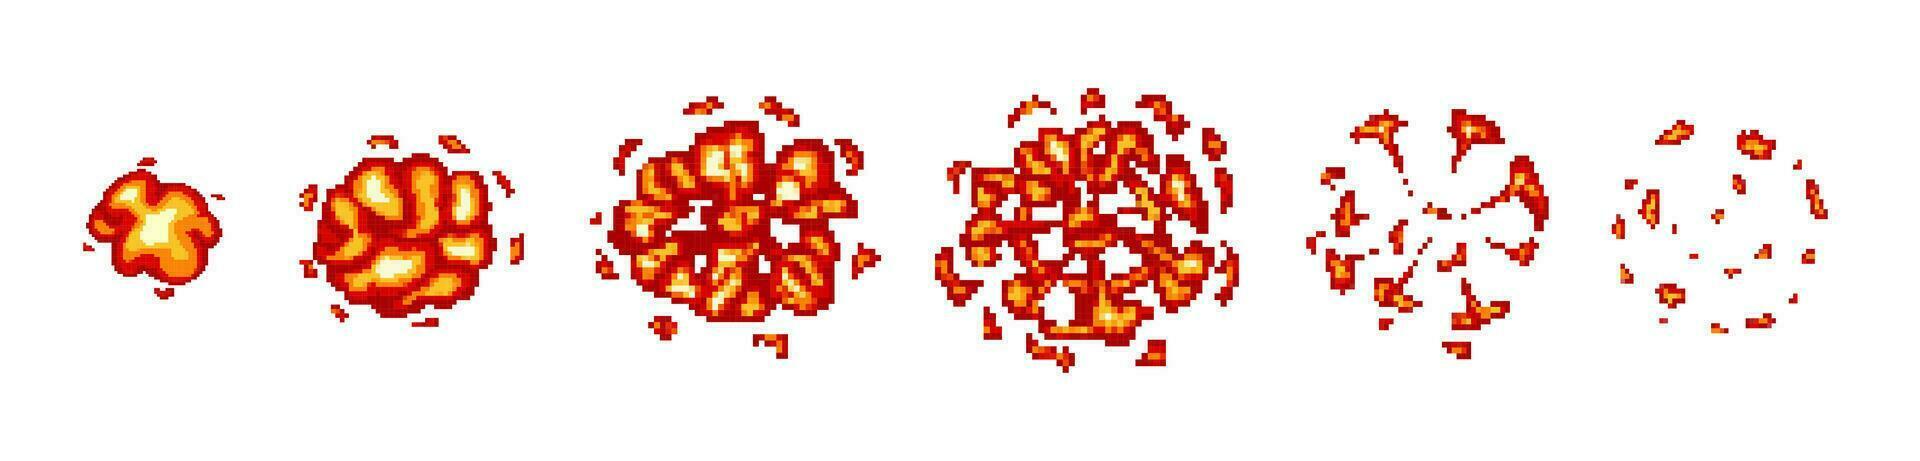 8 bit game pixel explosion animation. Retro game explosion vector